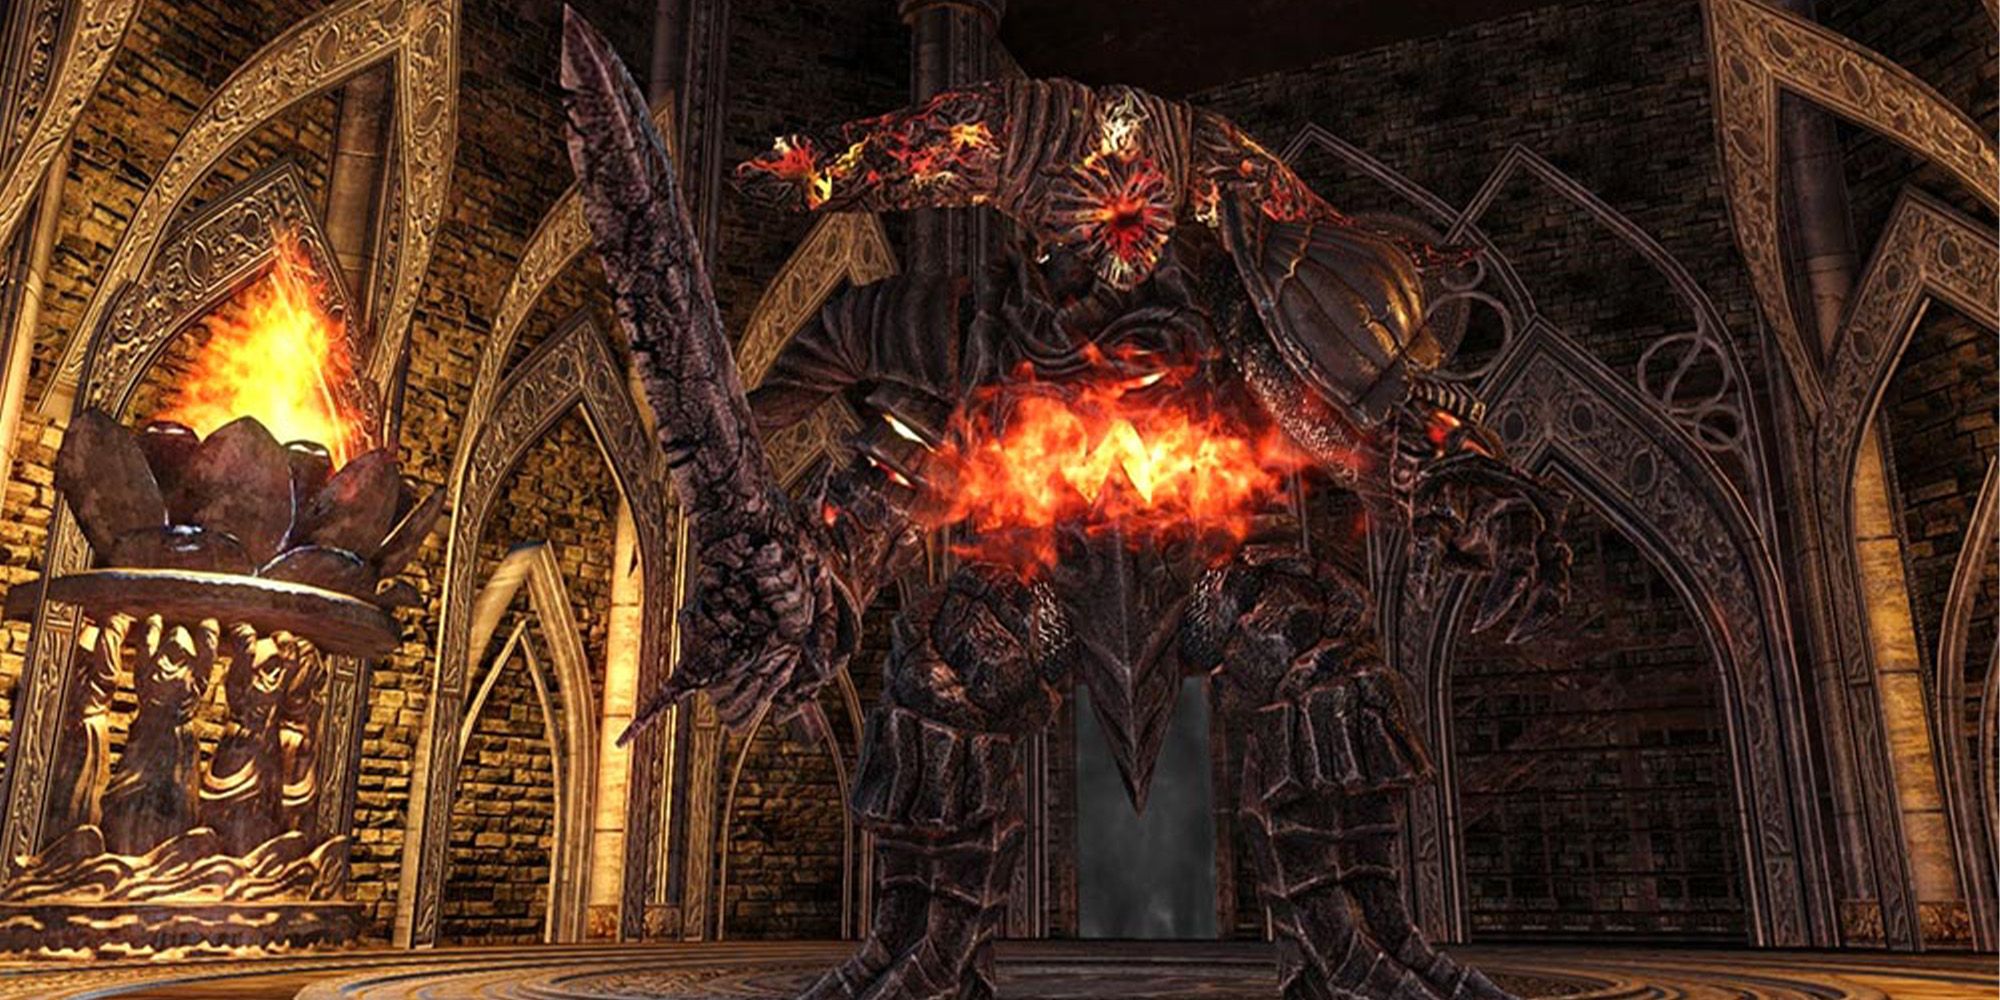 Smelter Demon boss from Dark Souls 2